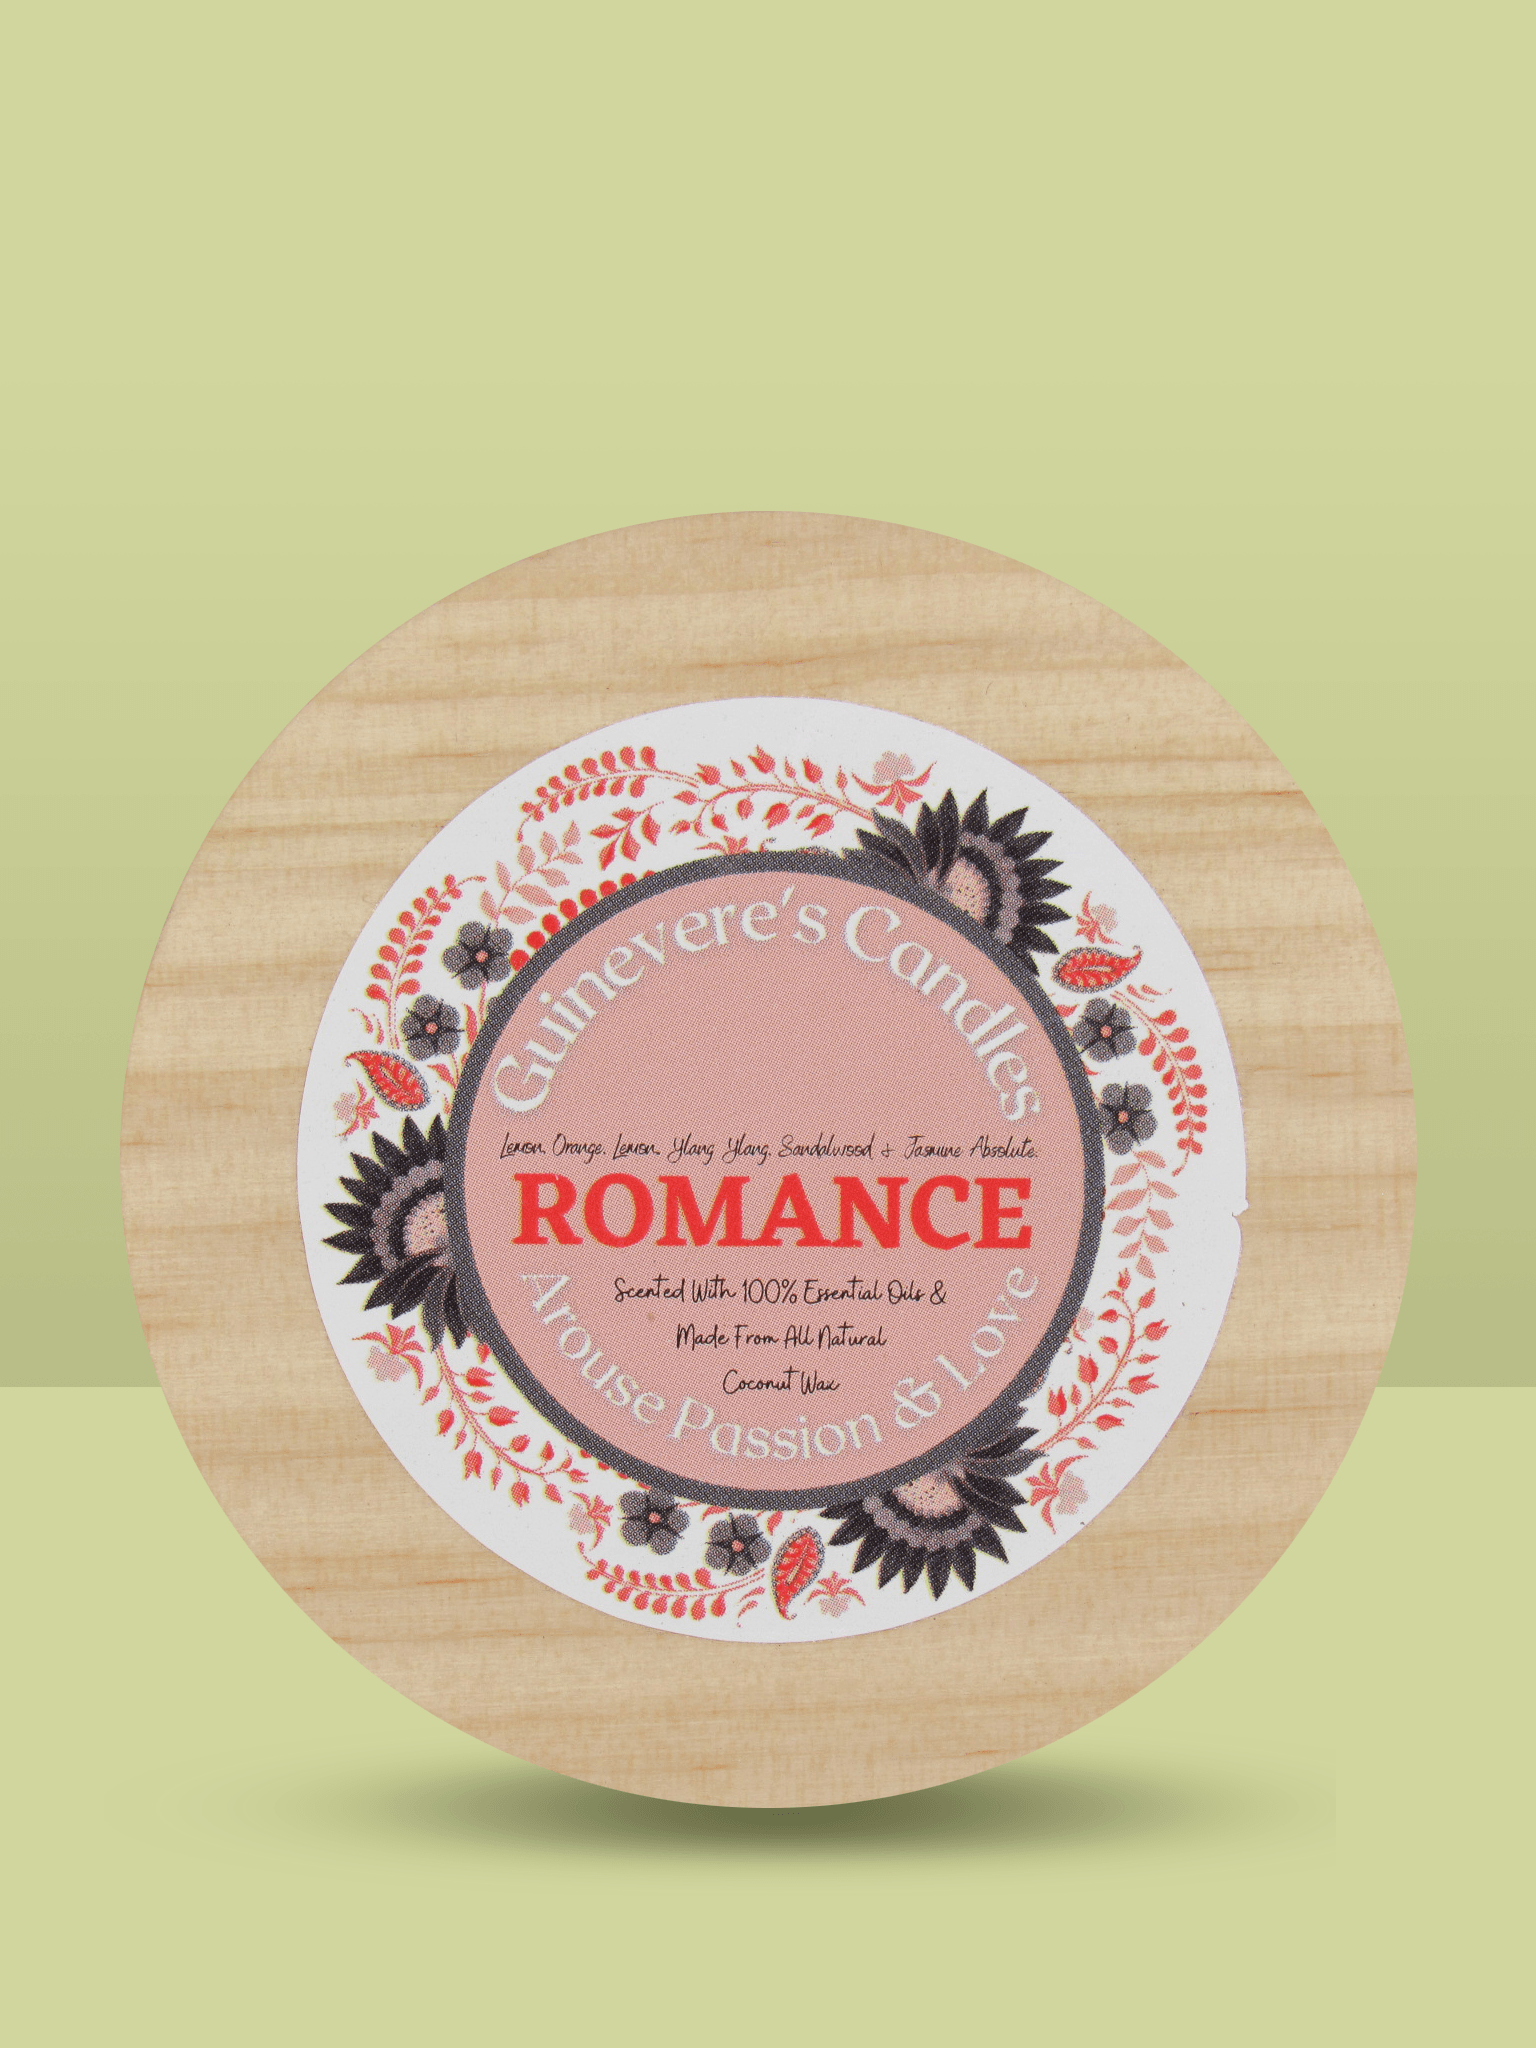 ROMANCE--AROUSE PASSION & LOVE JAR CANDLE